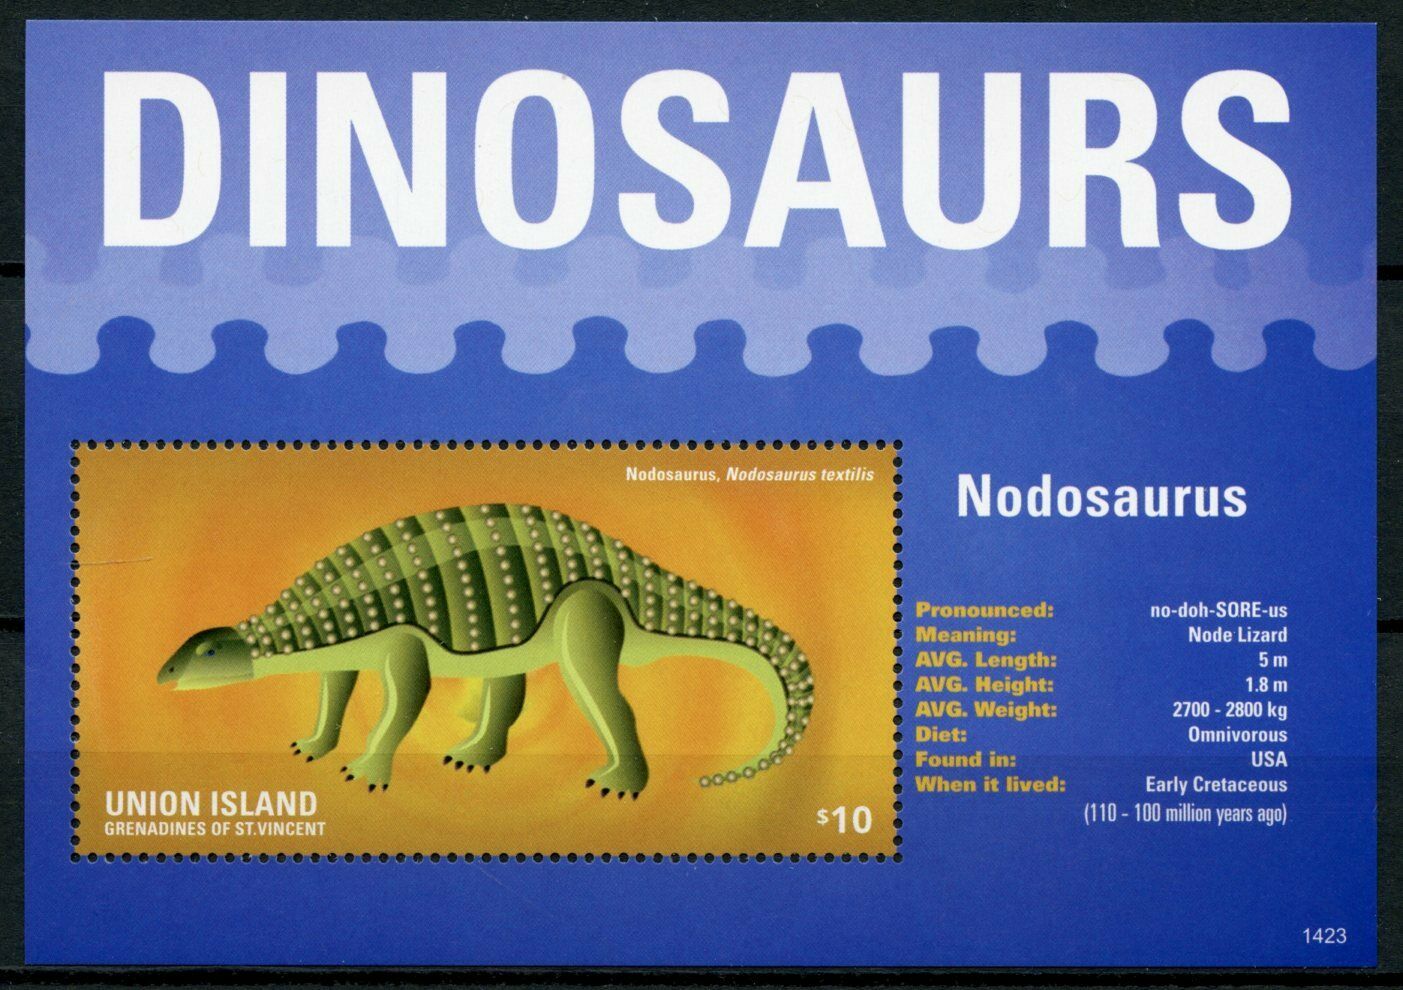 Union Island Gren St Vincent Dinosaurs Stamps 2014 MNH Nodosaurus 1v S/S II